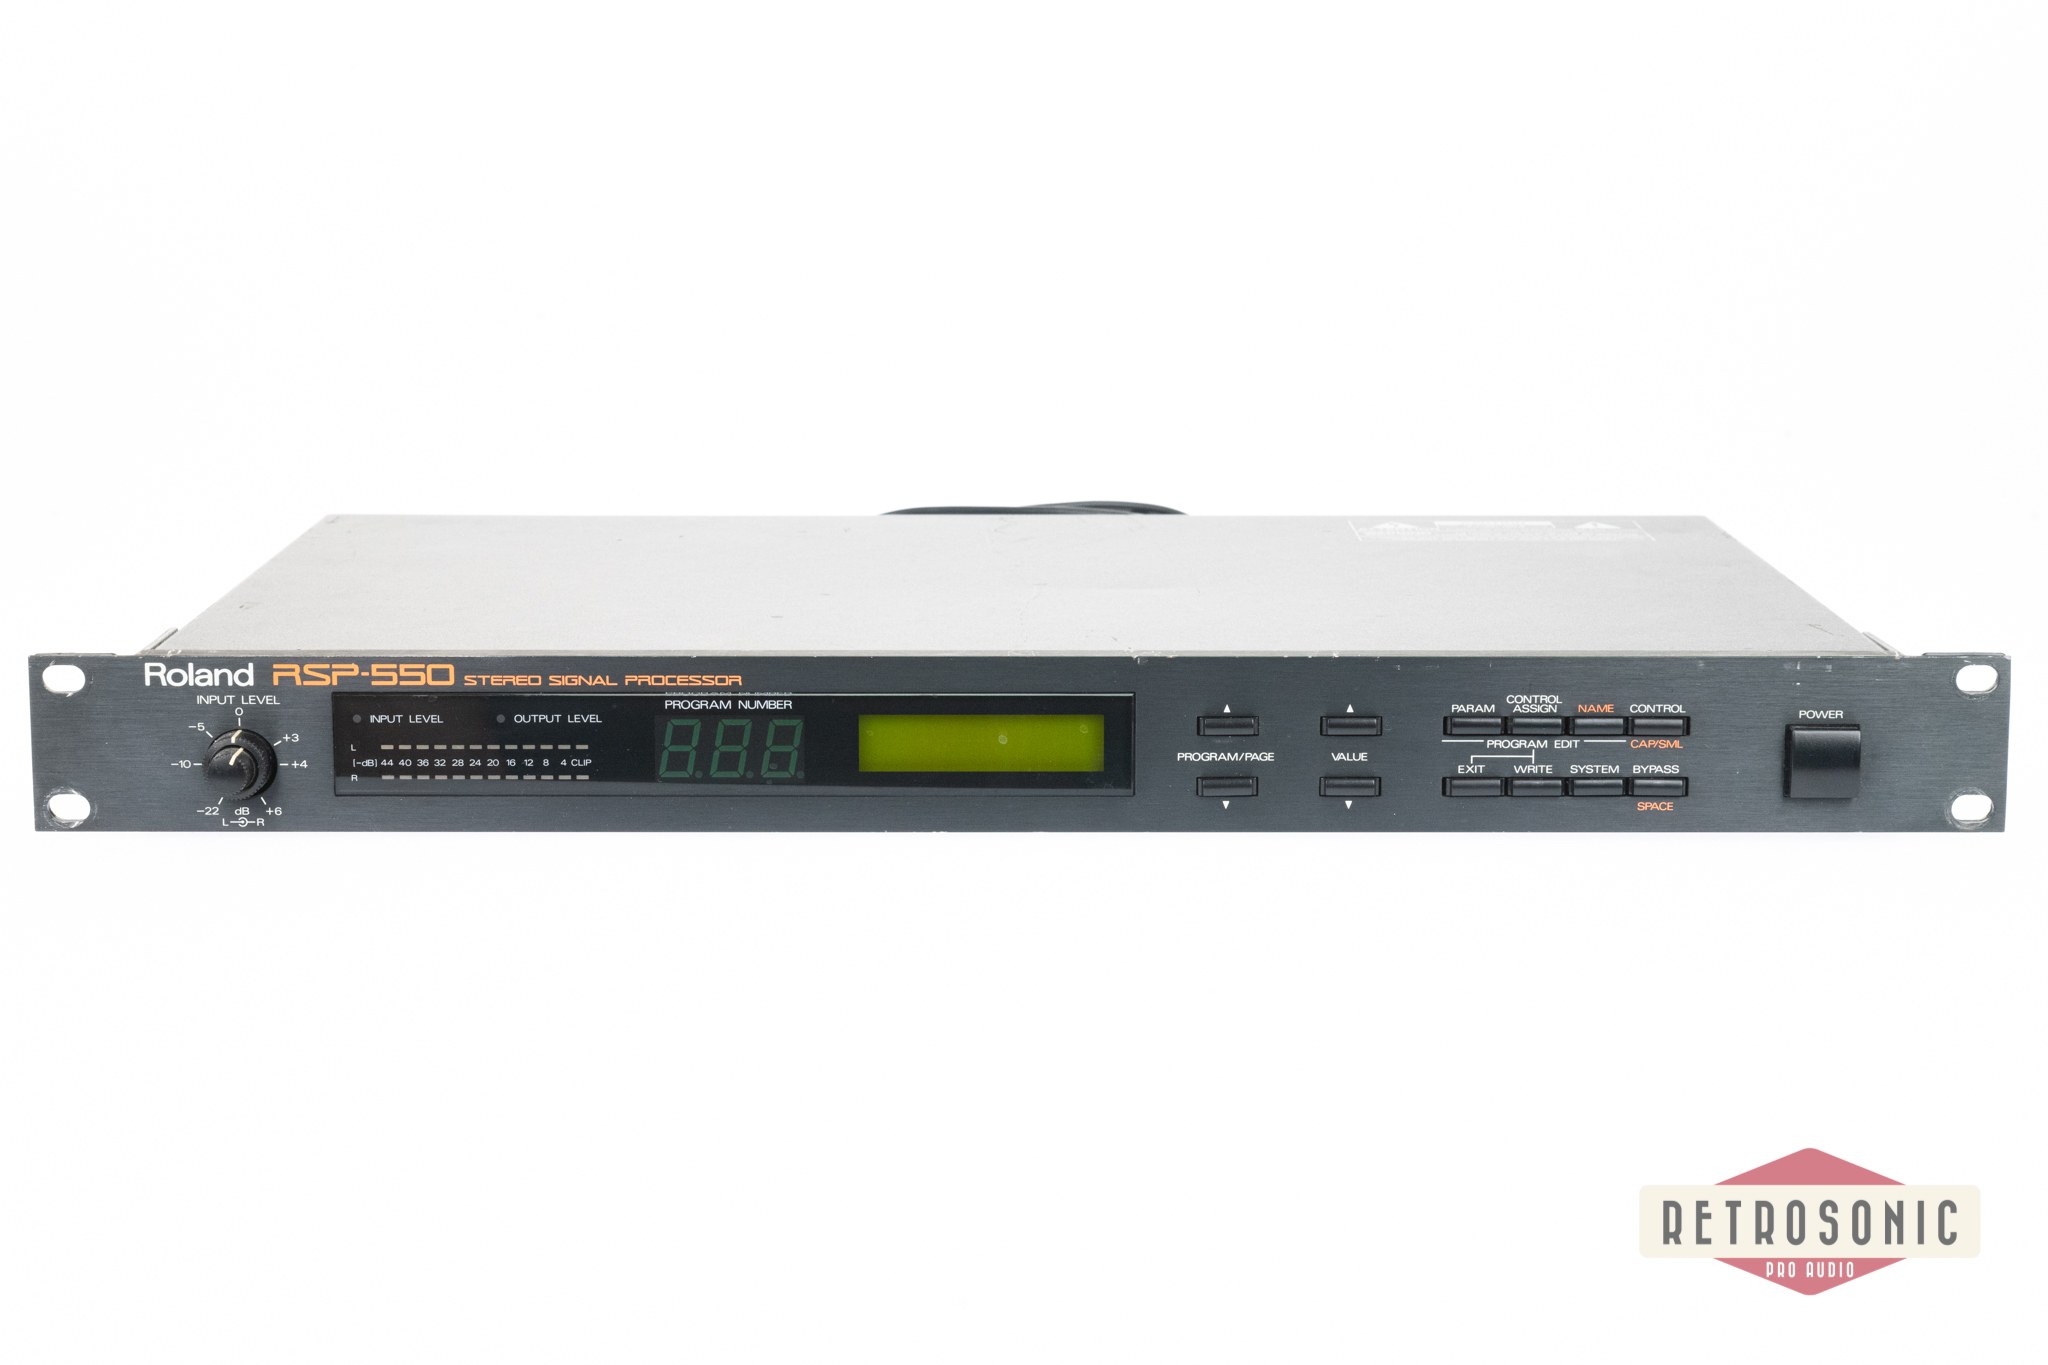 Roland RSP-550 Stereo Signal Processor